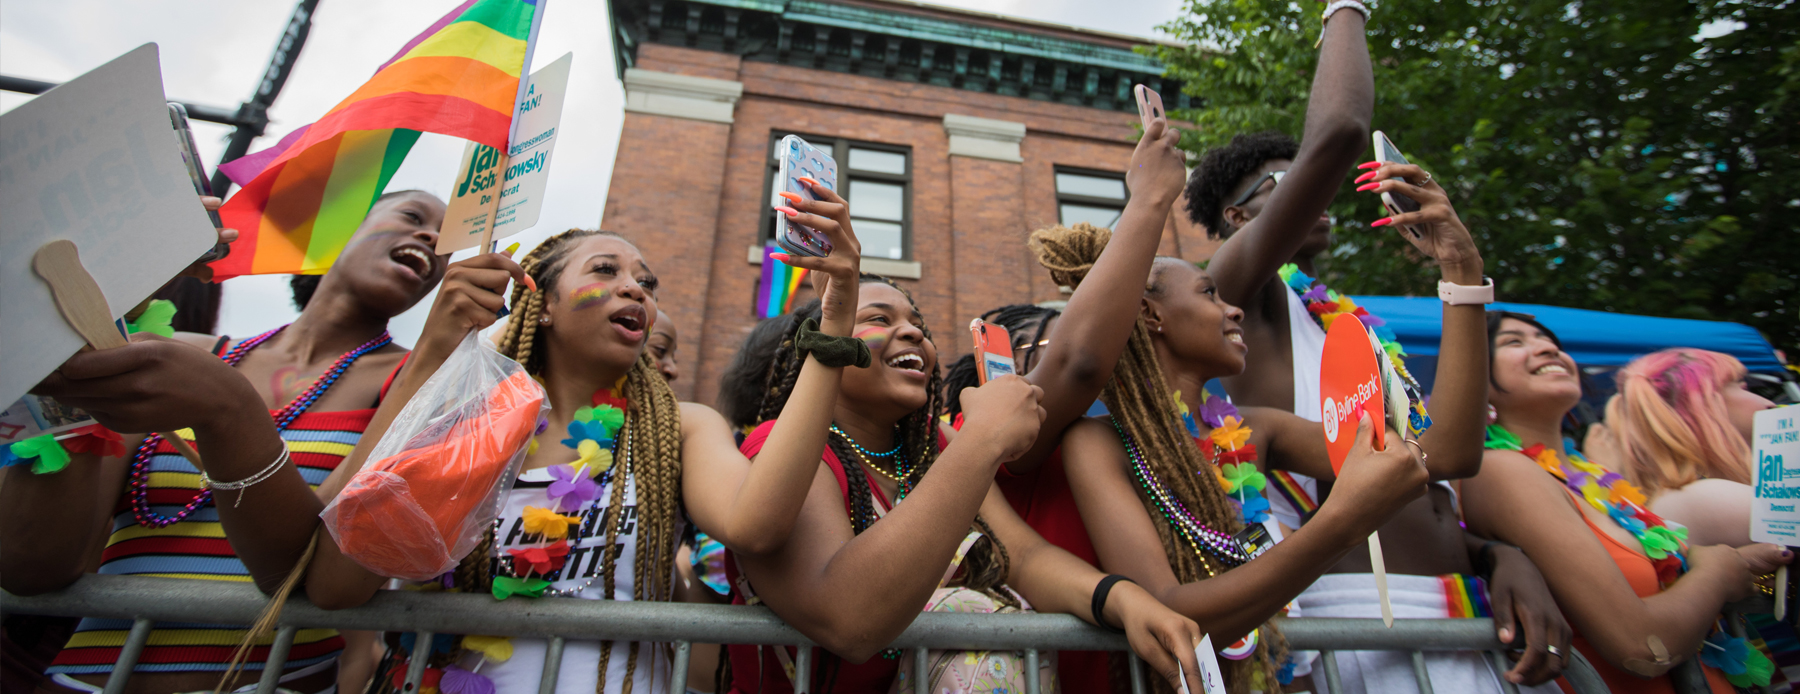 Chicago Pride Chicago Pride Parade, Pride Fest, and More